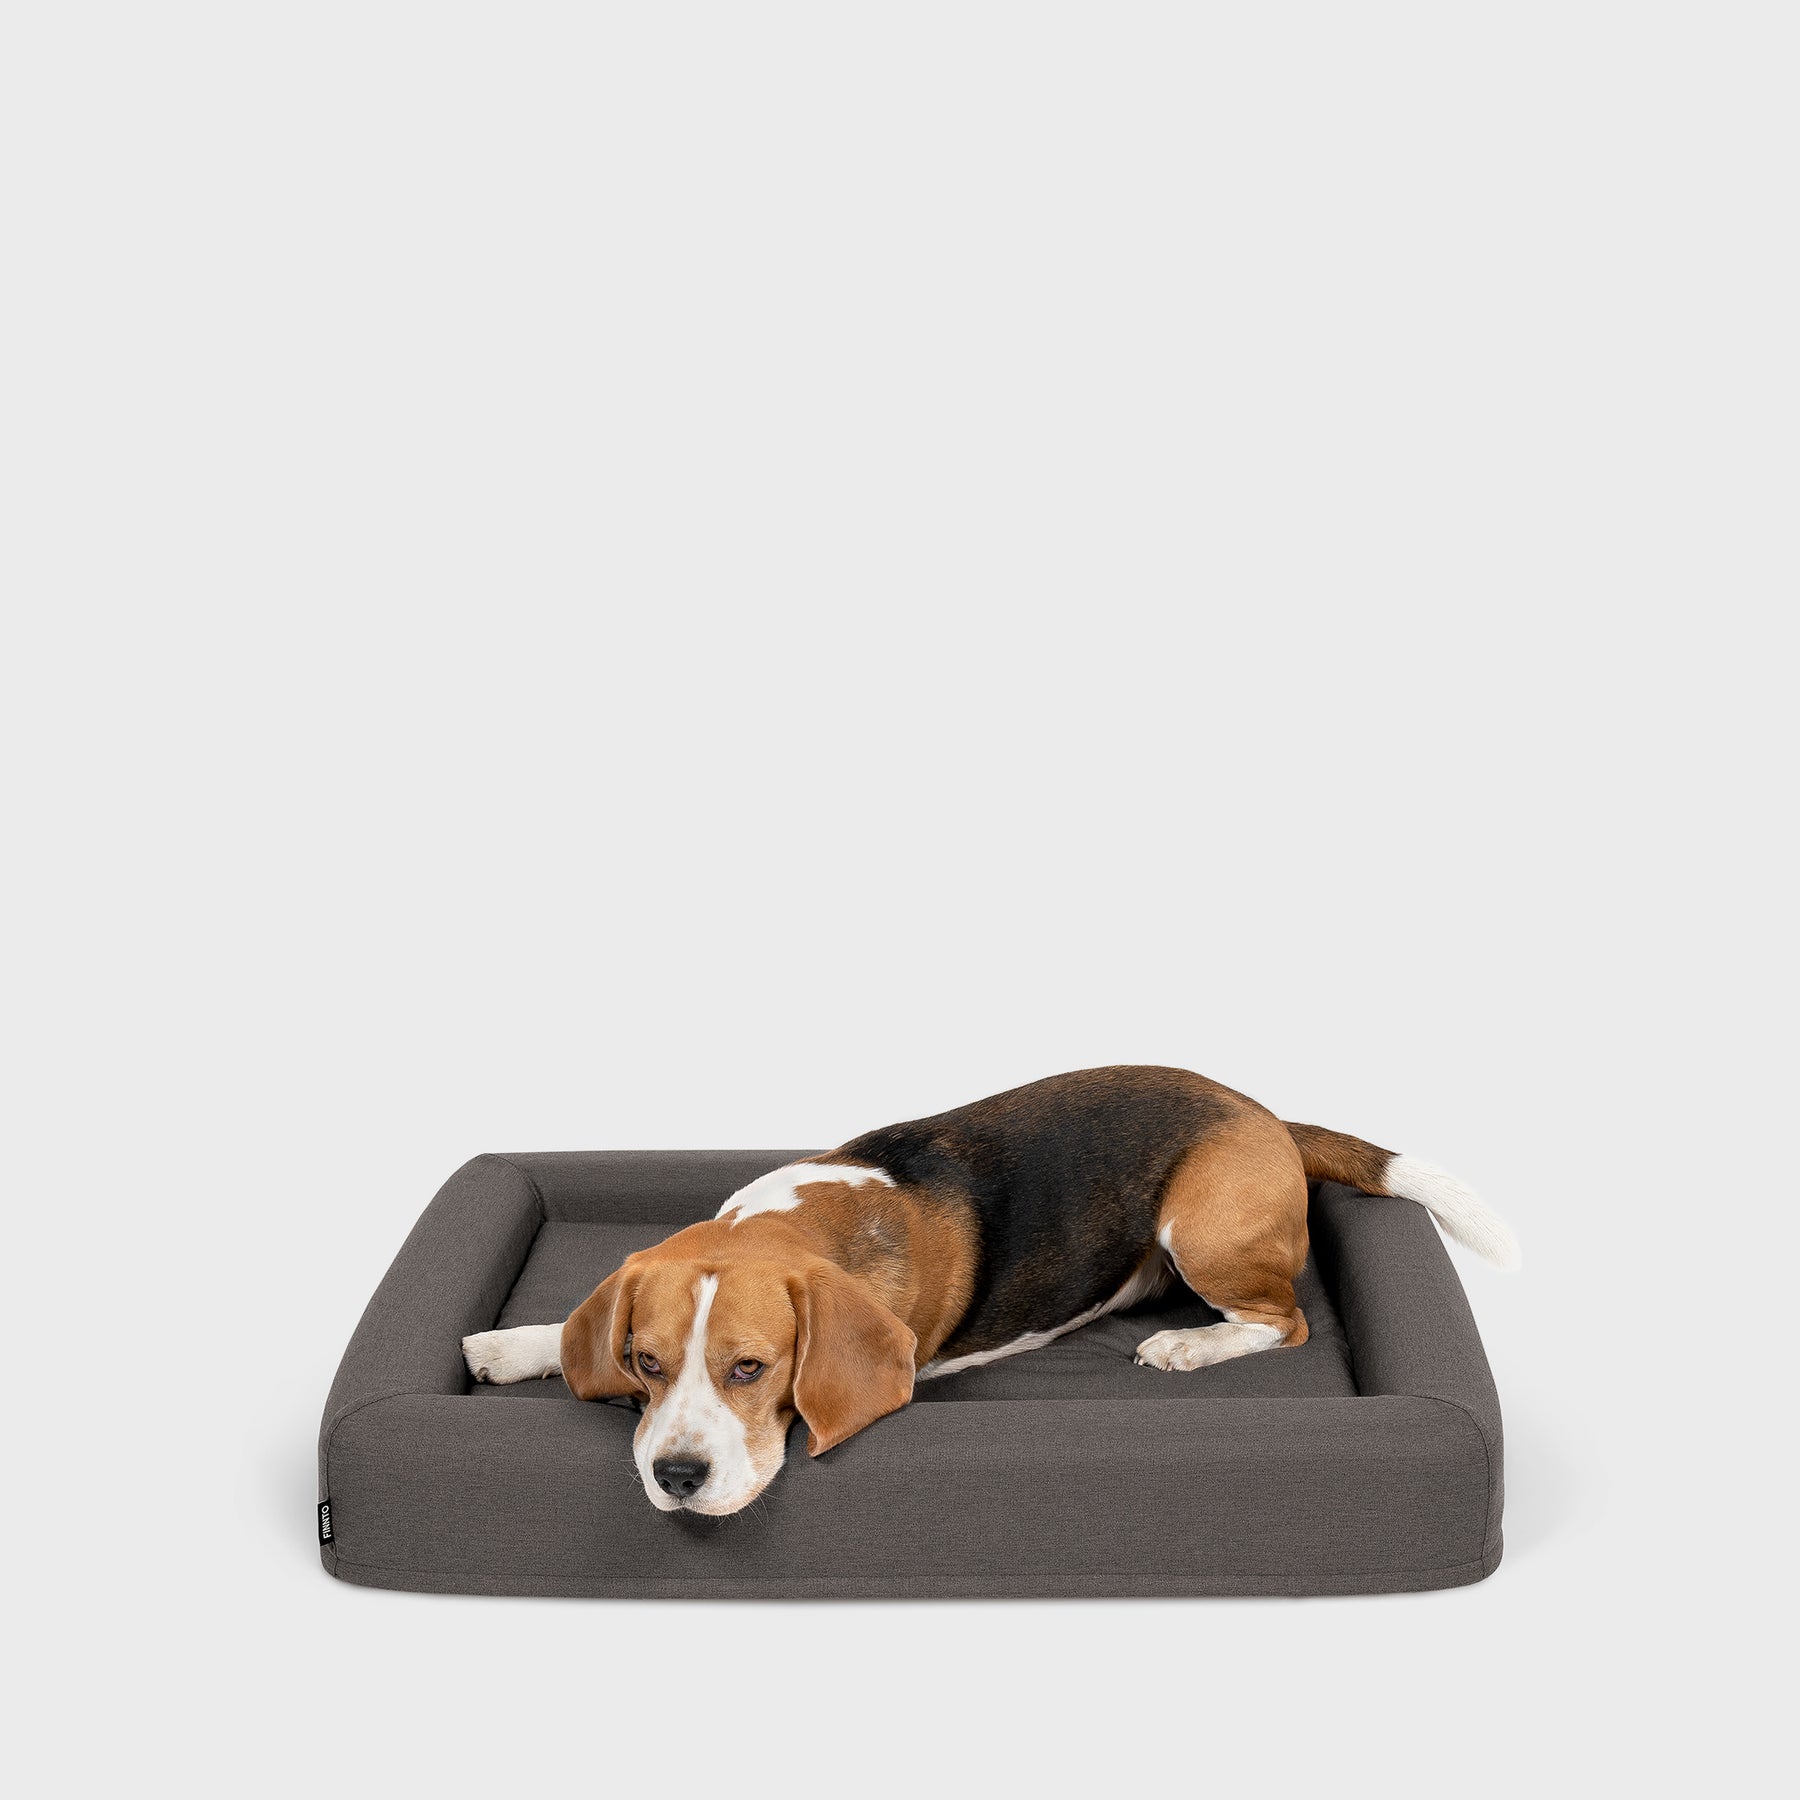 FINNTO Hundebett orthopädisch dunkelgrau Beagle skandinavisches Design